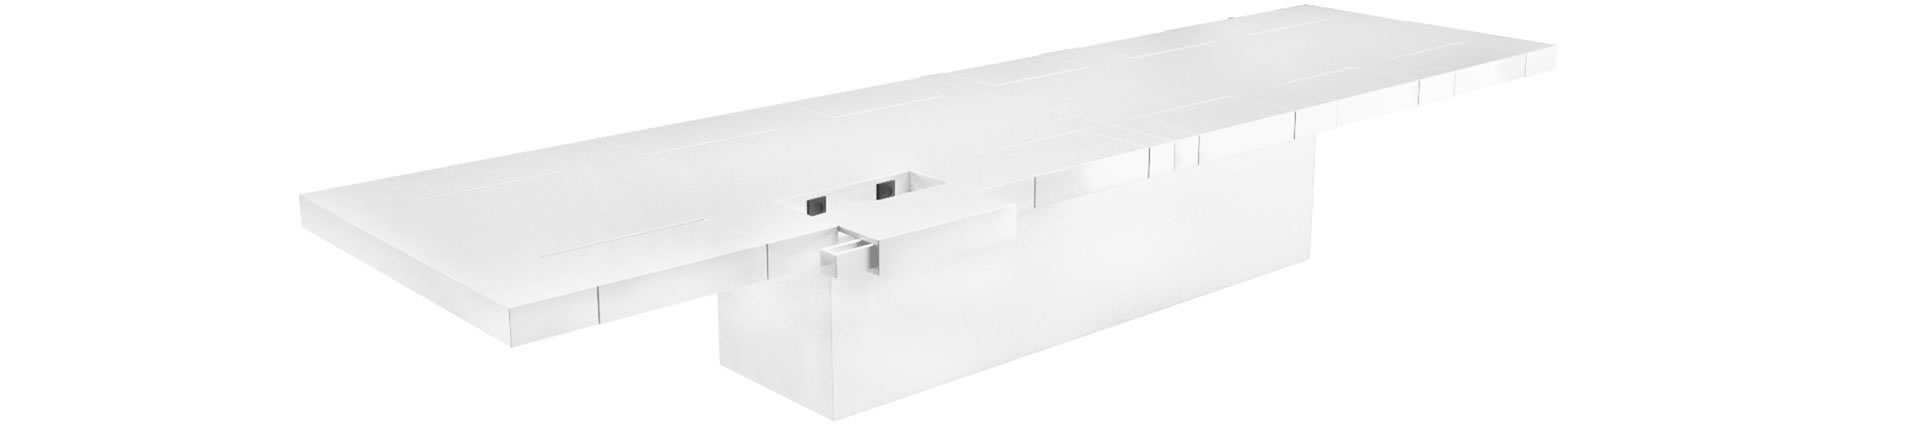 konferenztisch conventus ausziehbare tischplatte modern kabelkanal monitorlift designmoebel rechteck 2